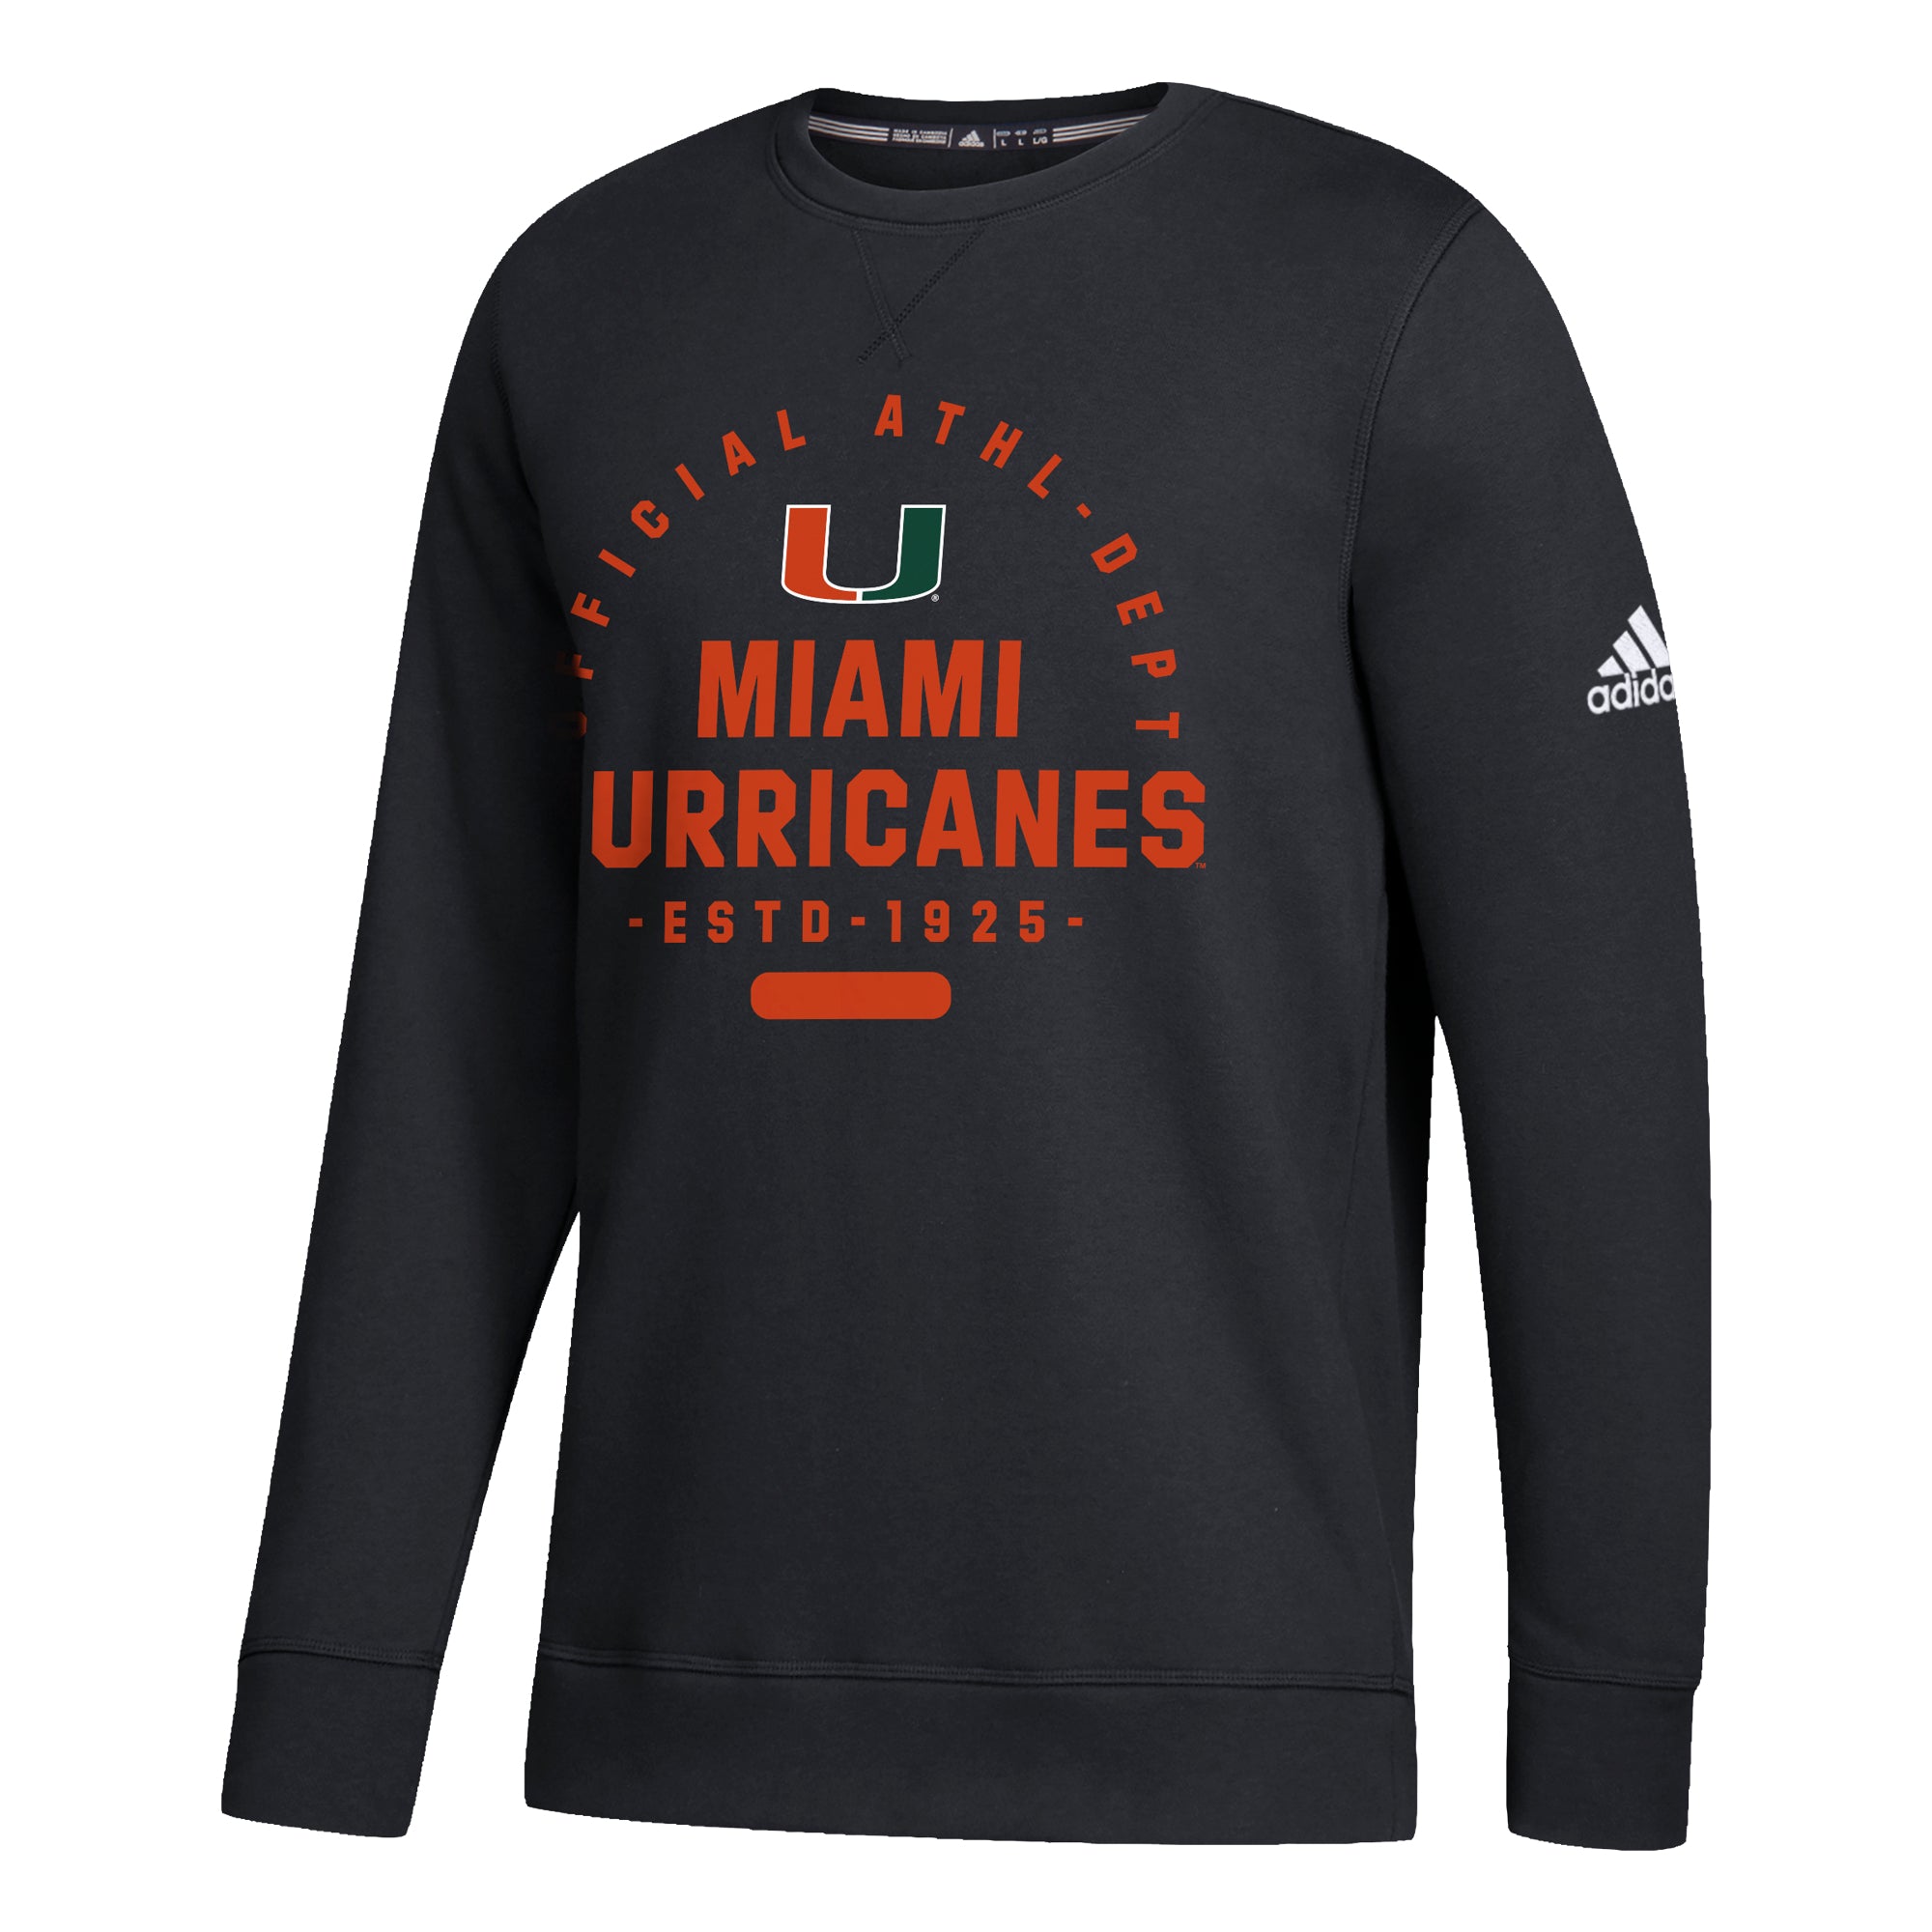 Miami Hurricanes adidas Athletic Dept Fleece Crew Sweater - Black